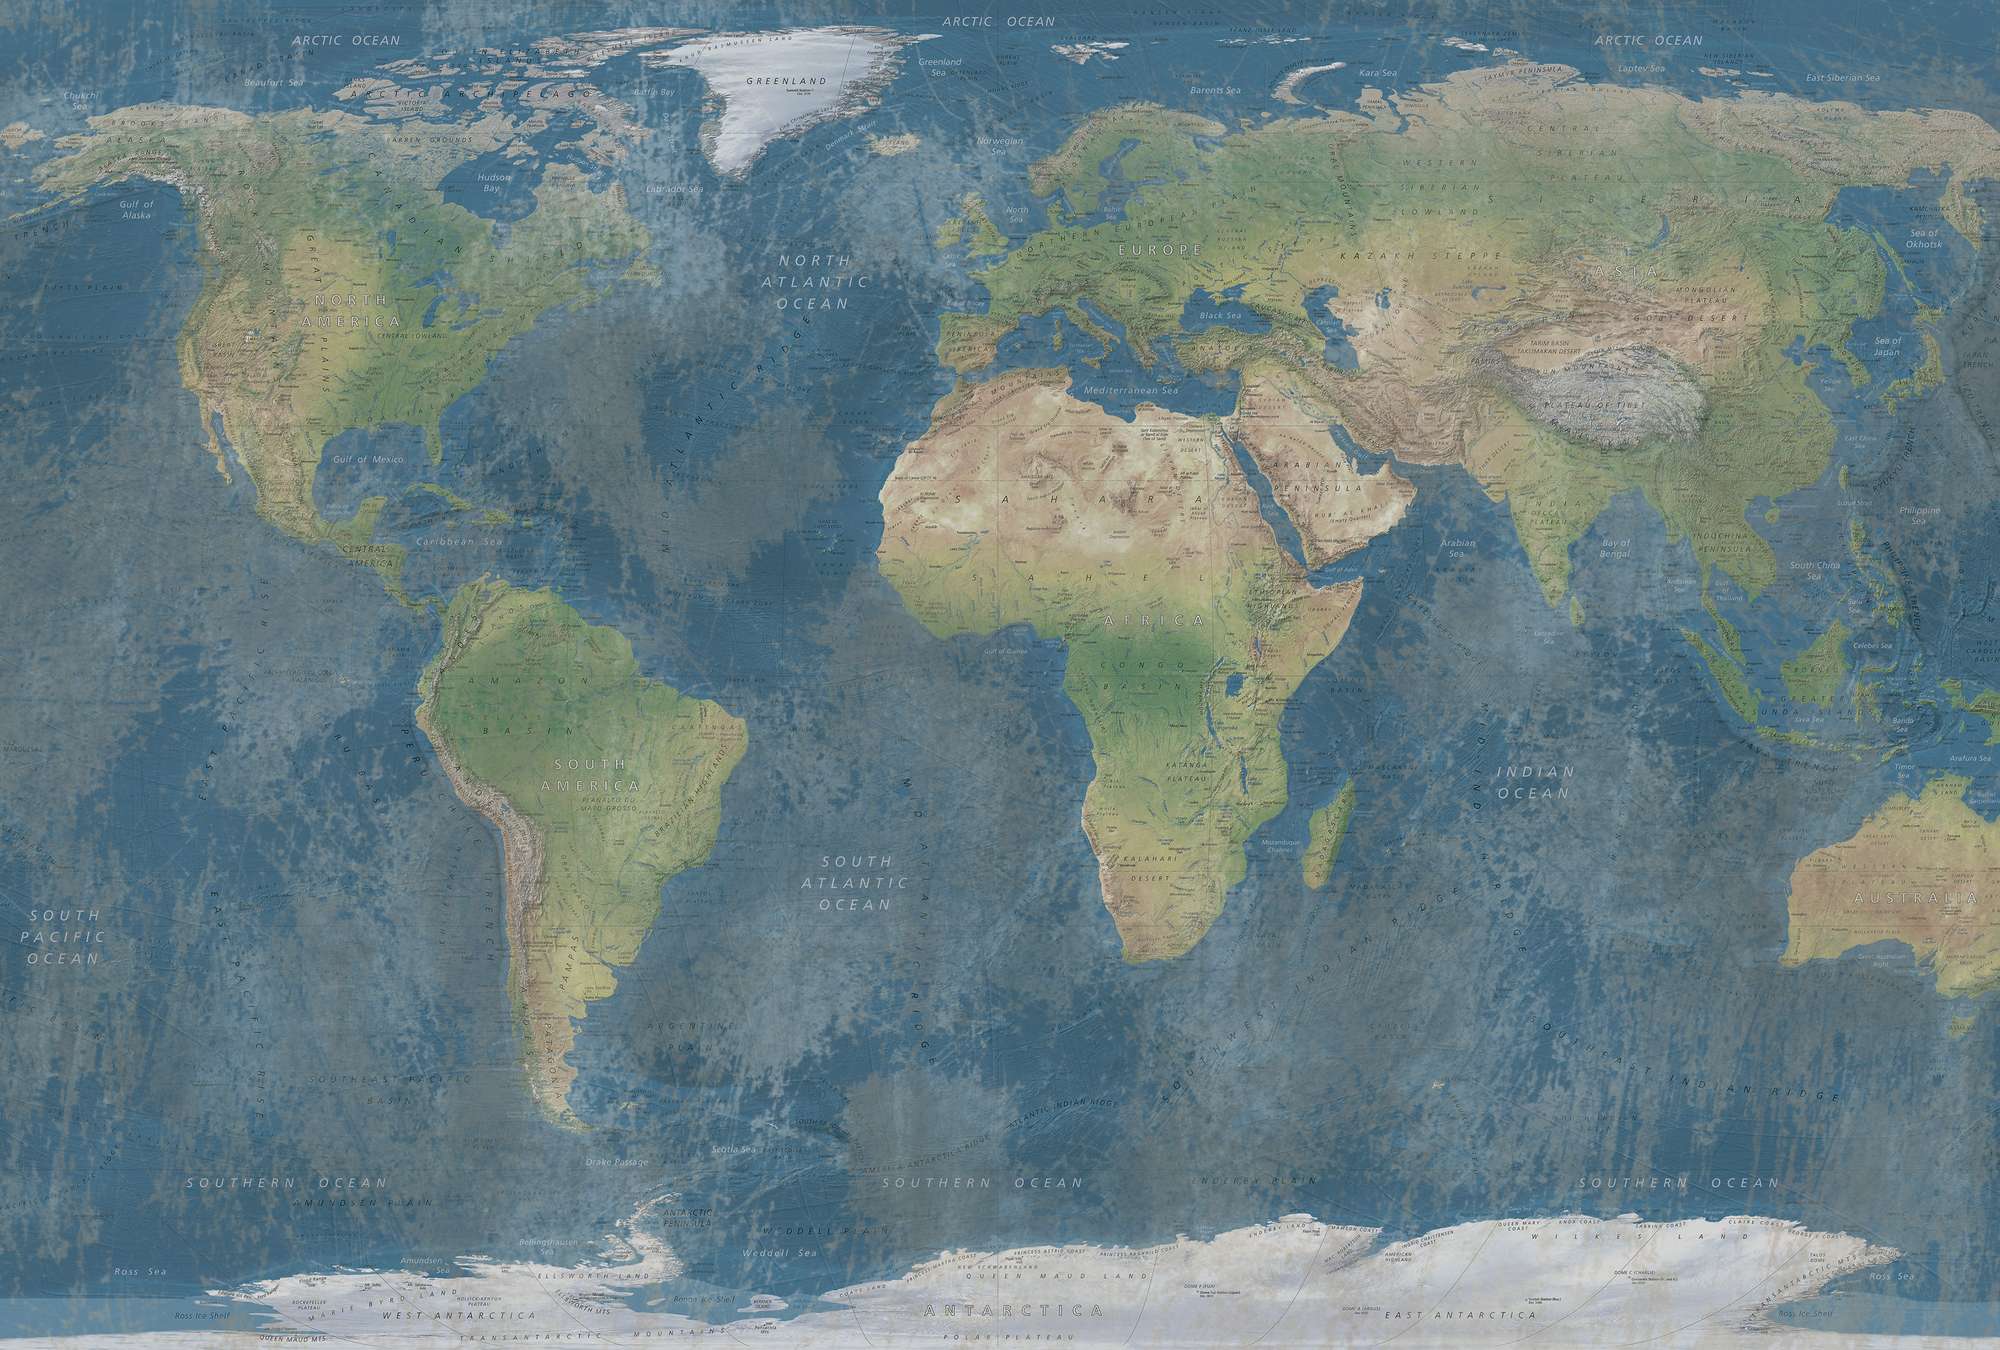             Photo wallpaper world map in natural colour scheme
        